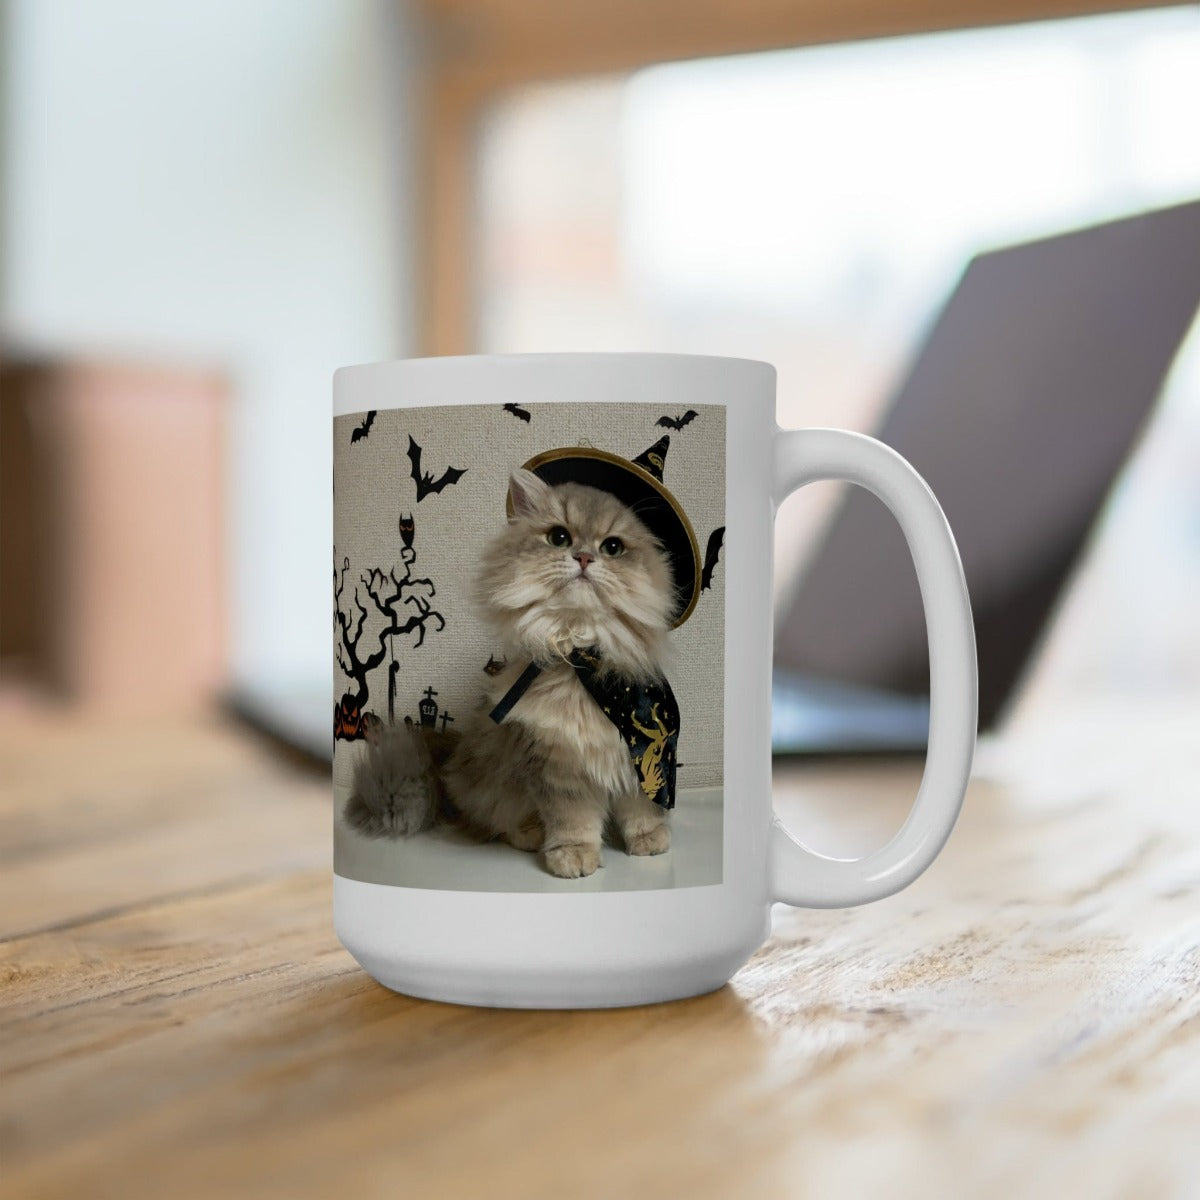 Printify Mug 15oz Coffee Mug, Halloween Coffee Mug, Cat in Witch Costume Mug, Halloween Gift, Birthday Gift, Friend Gift, White 15oz Ceramic 83648407855491868208